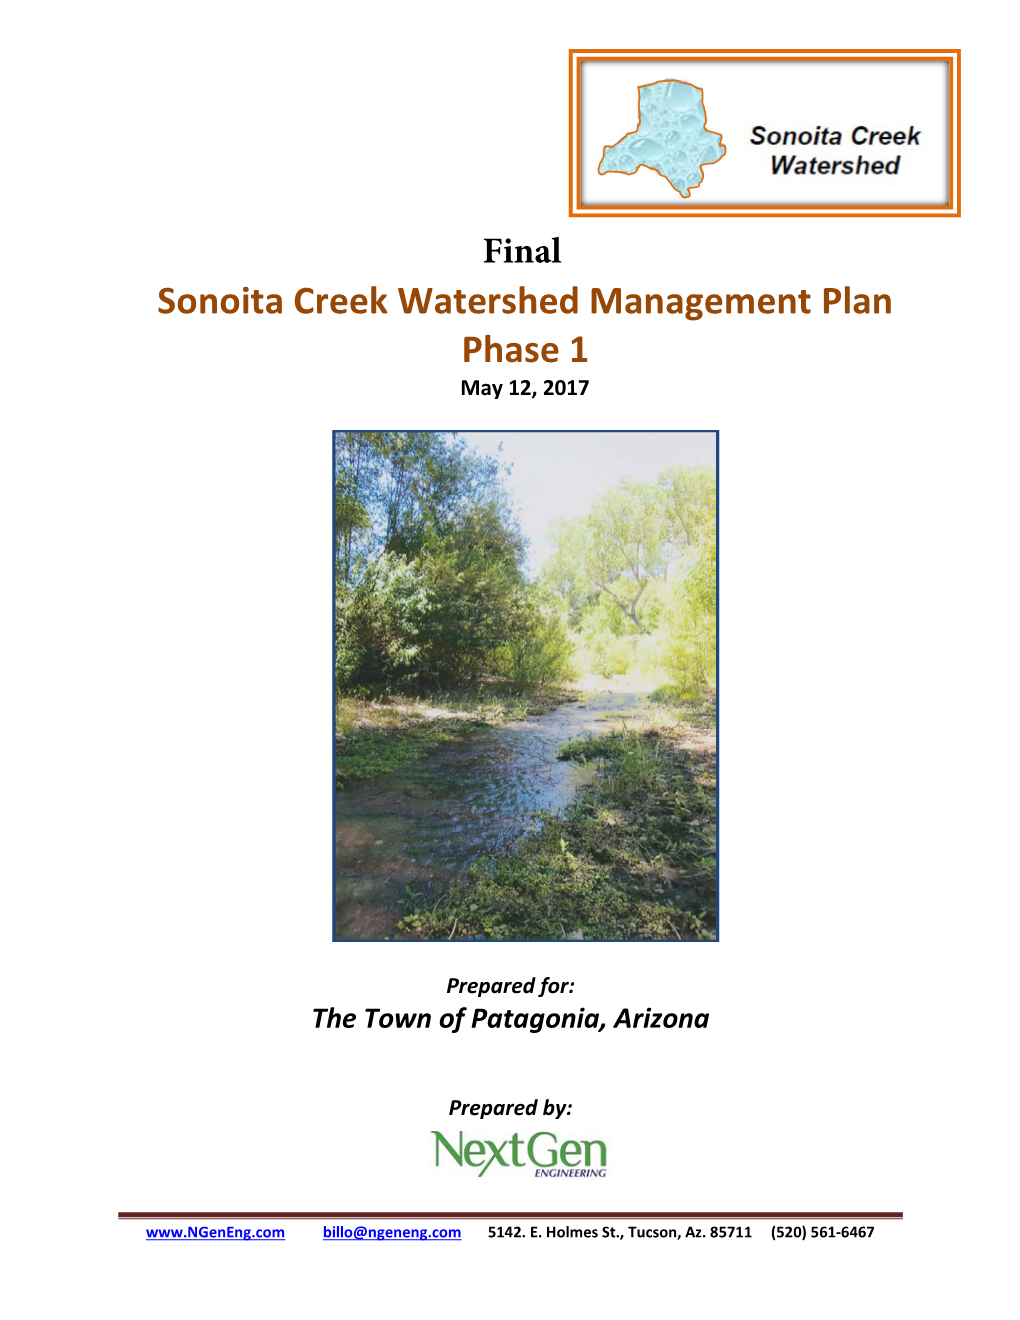 Sonoita Creek Watershed Management Plan Phase 1 May 12, 2017